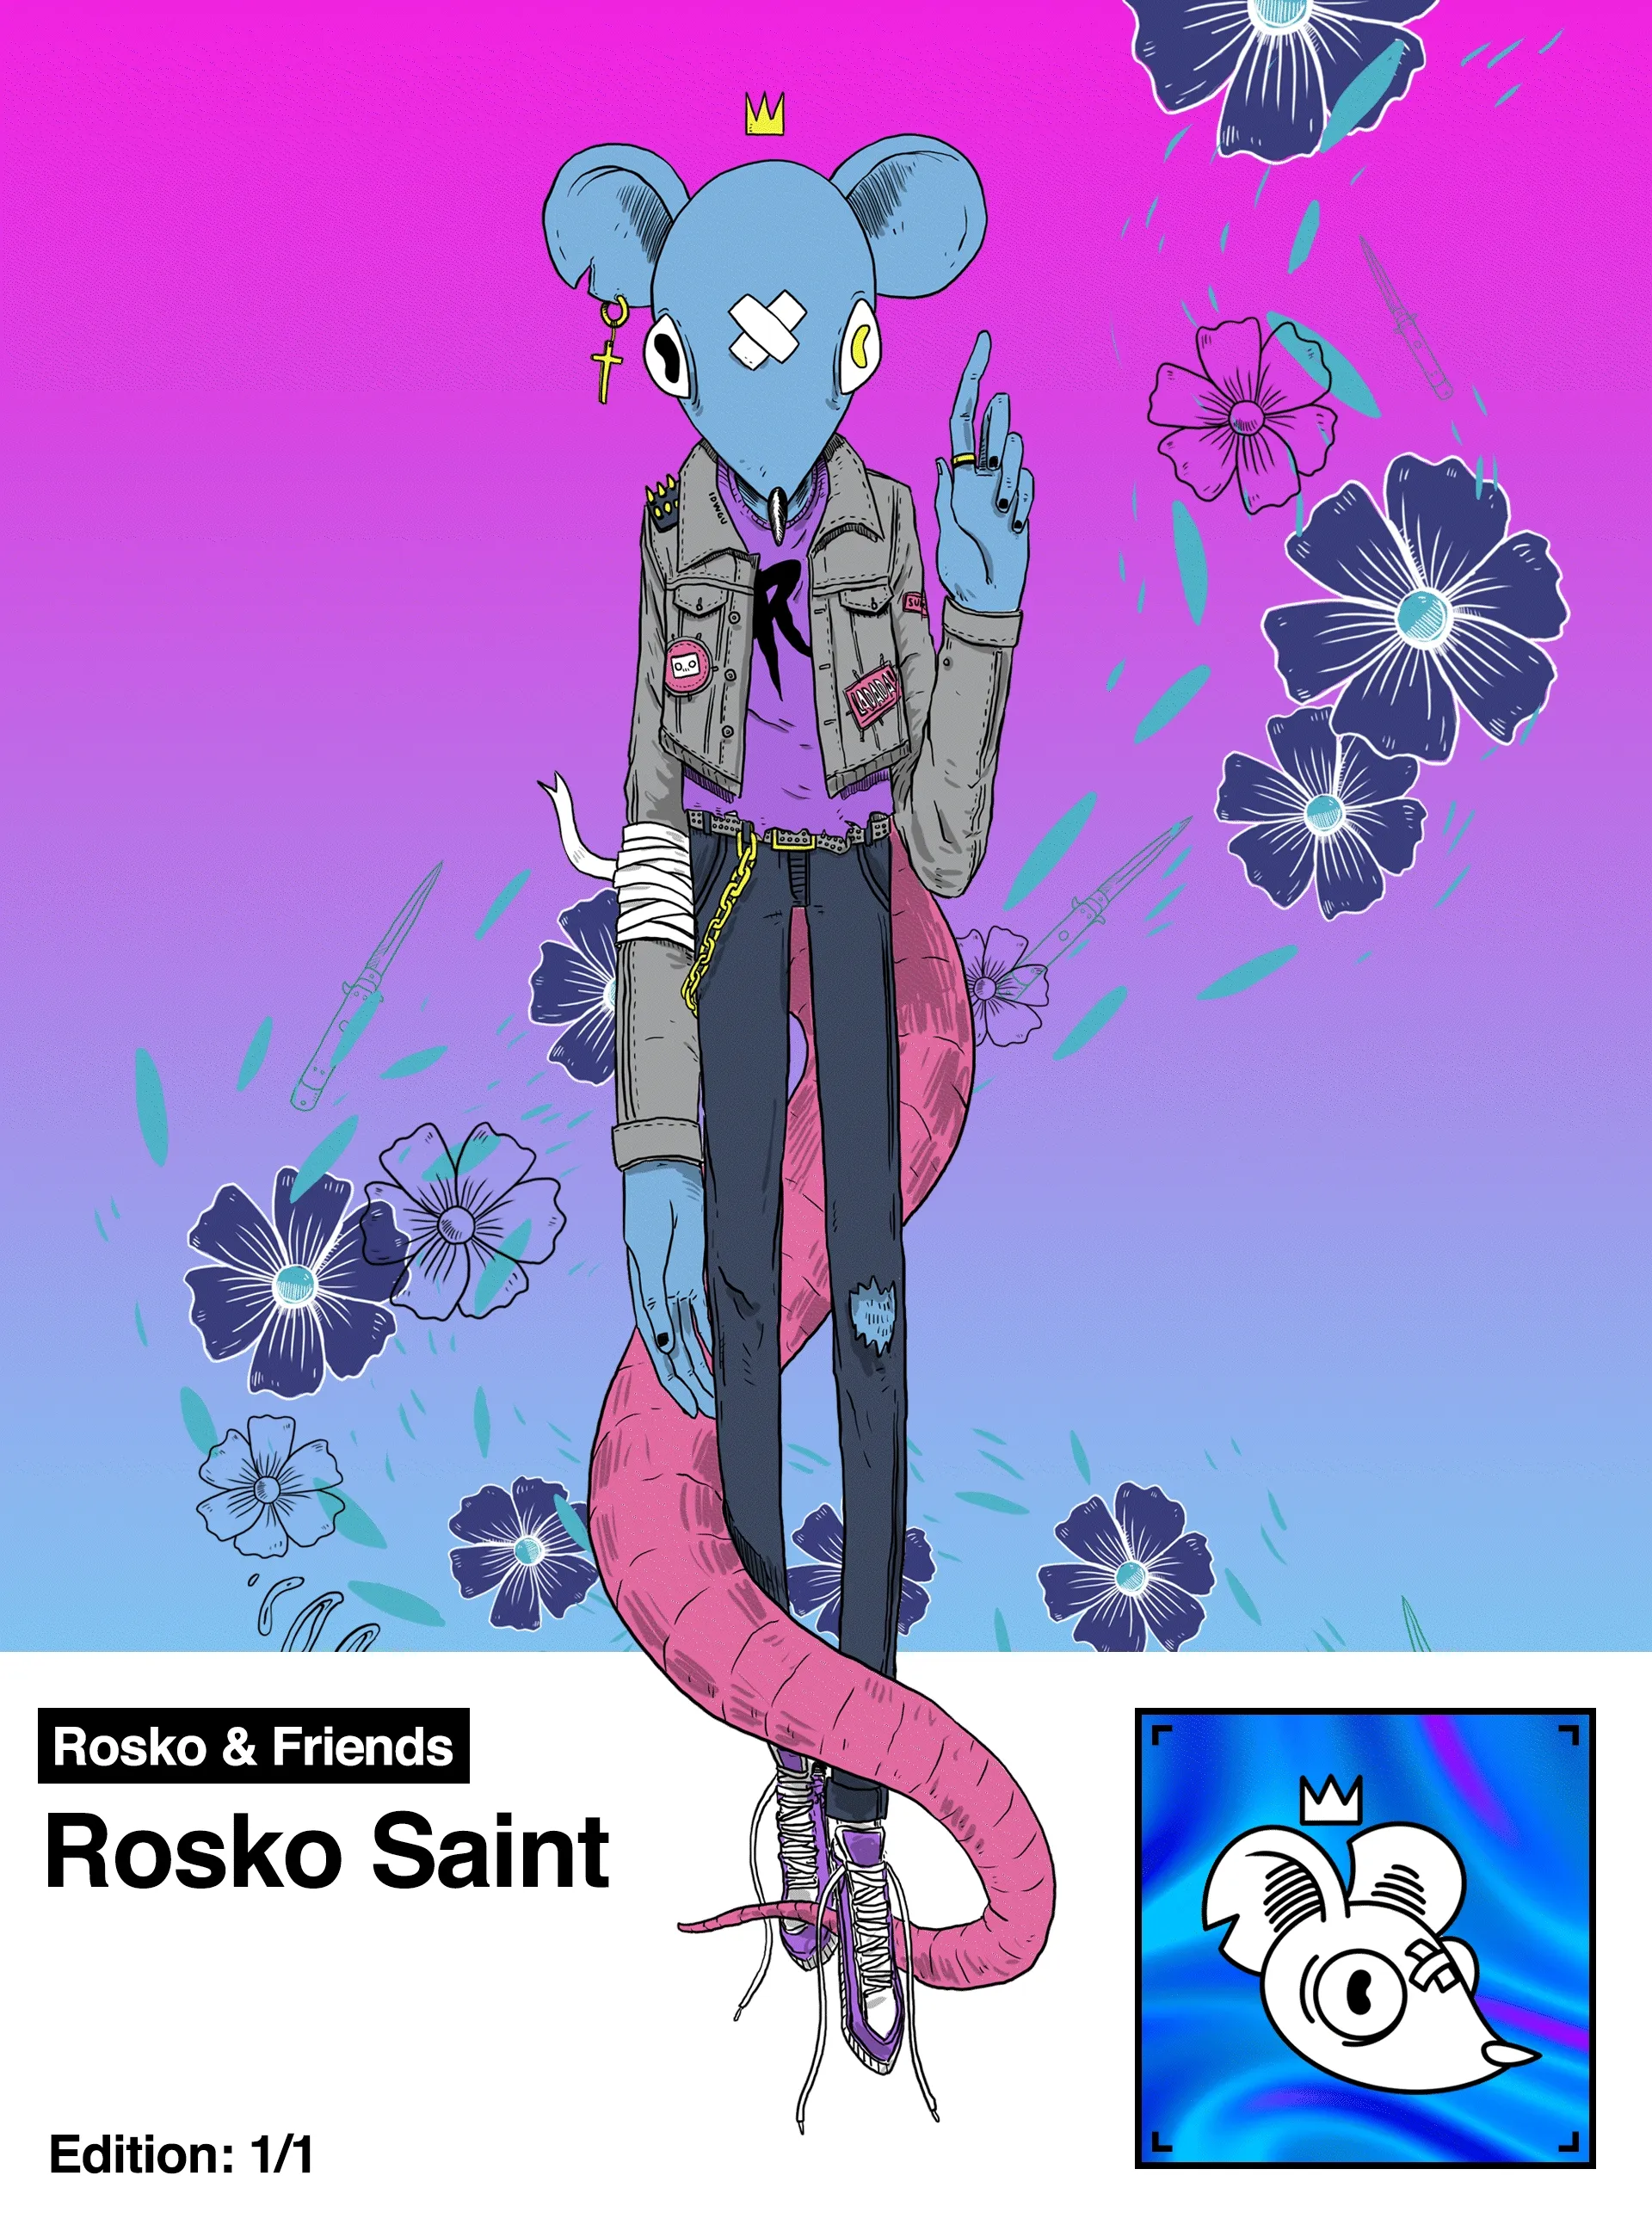 Rosko the Saint